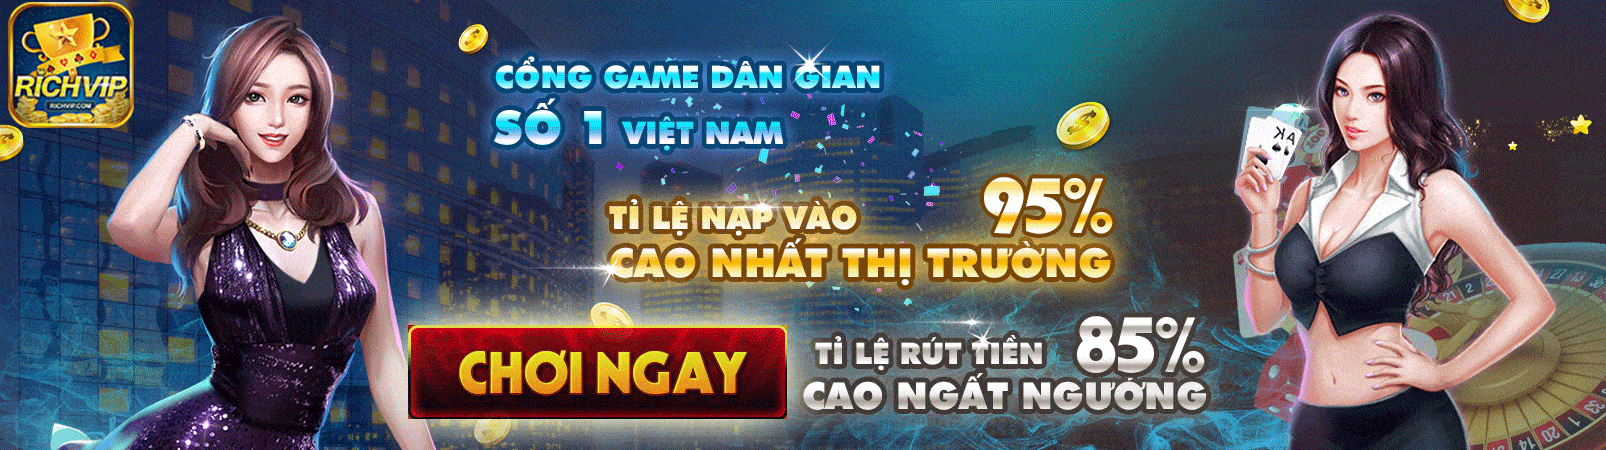 Cong game doi thuong uy tin nhat